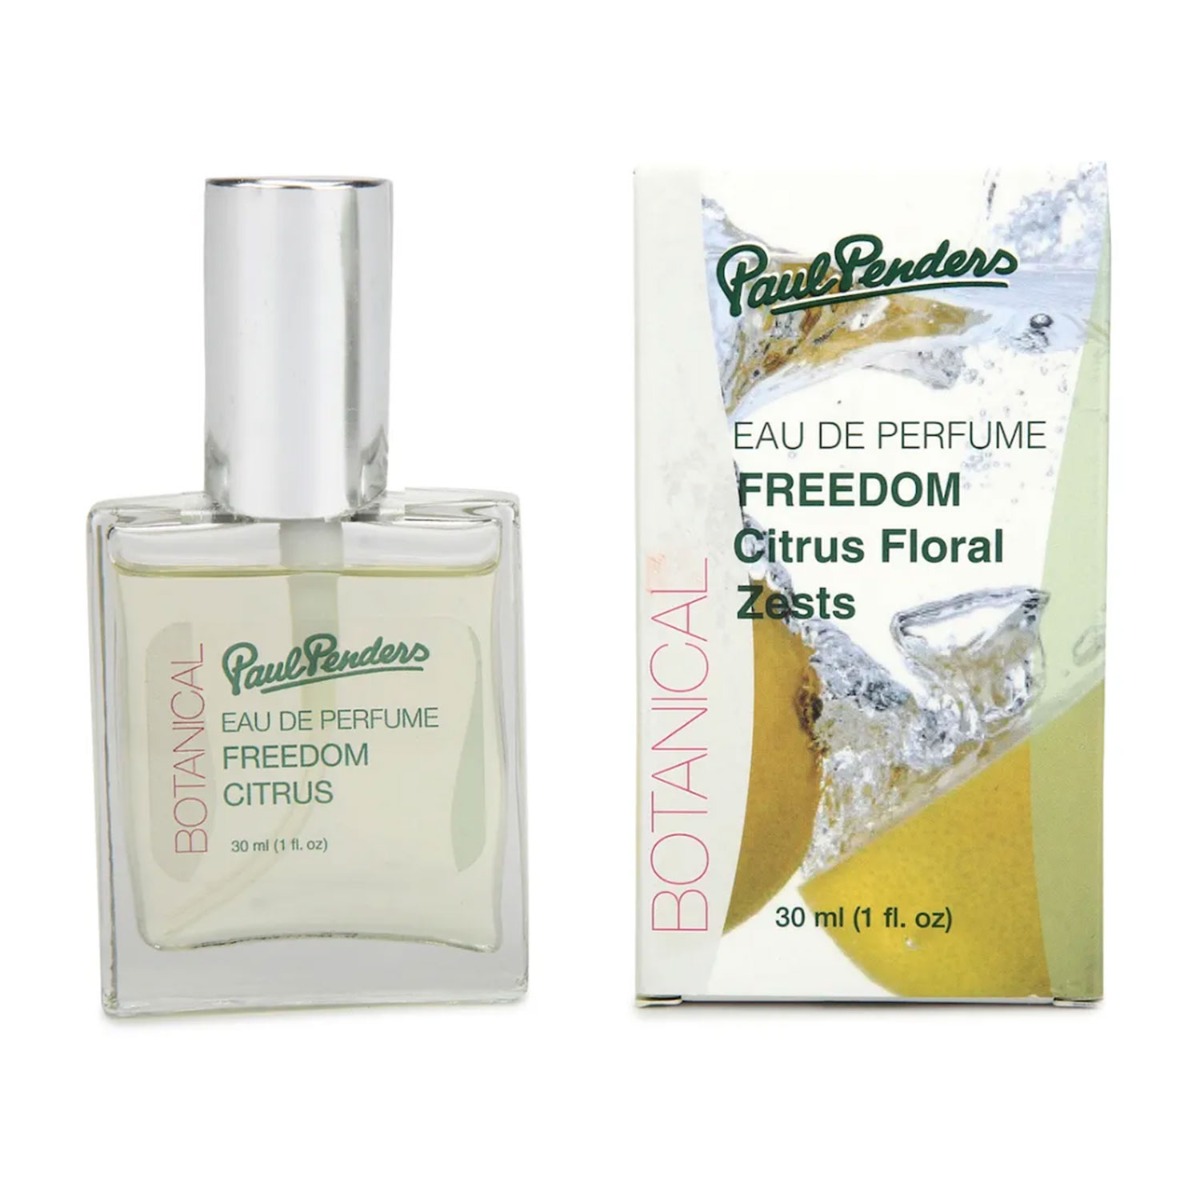 Paul Penders Freedom Citrus Eau De Perfume, 30ml